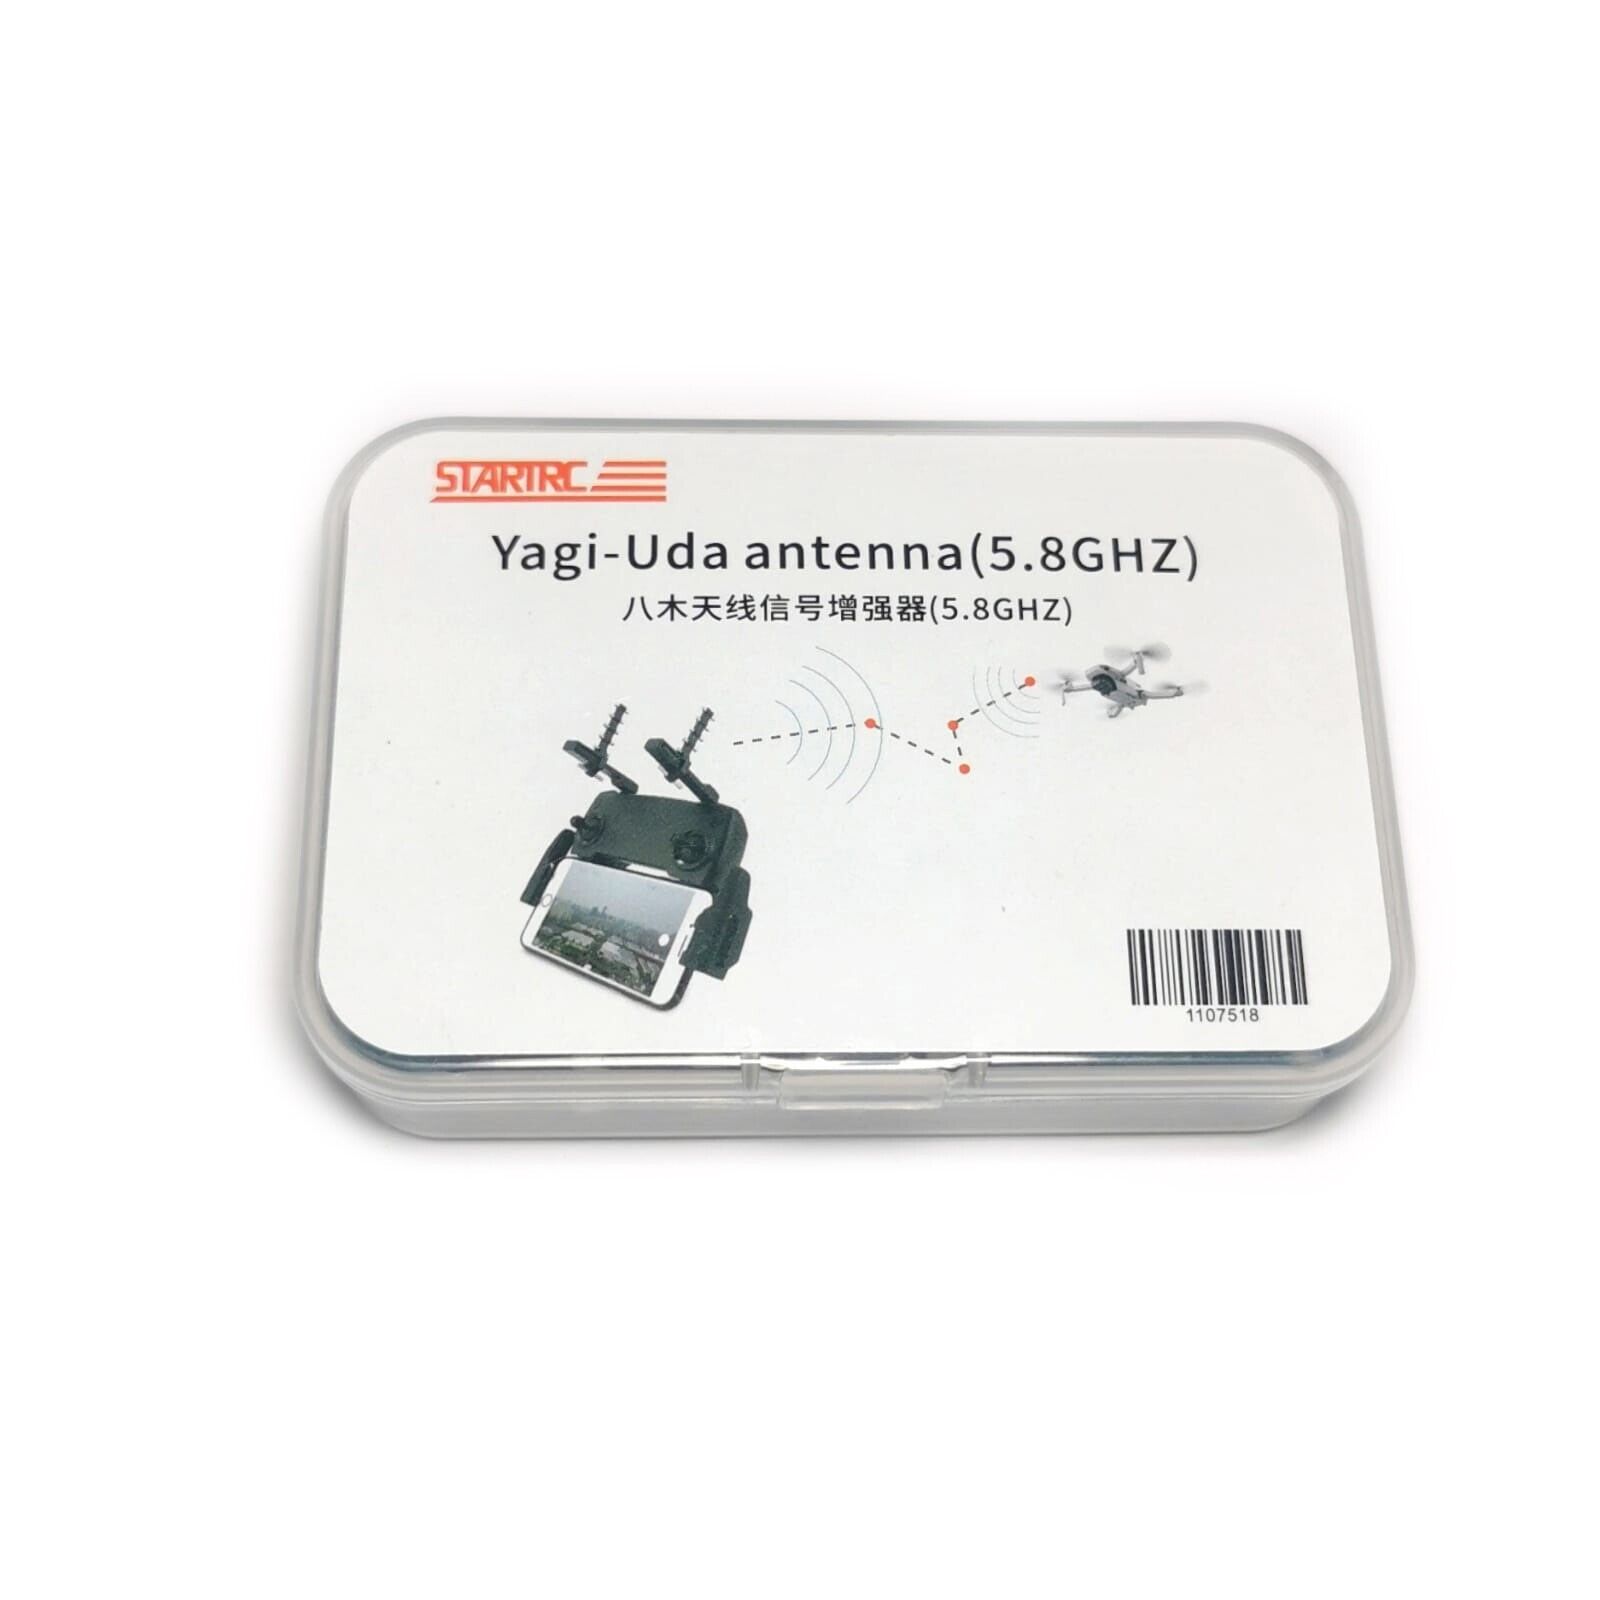 Yagi Antenna Range Extender for DJI Drones